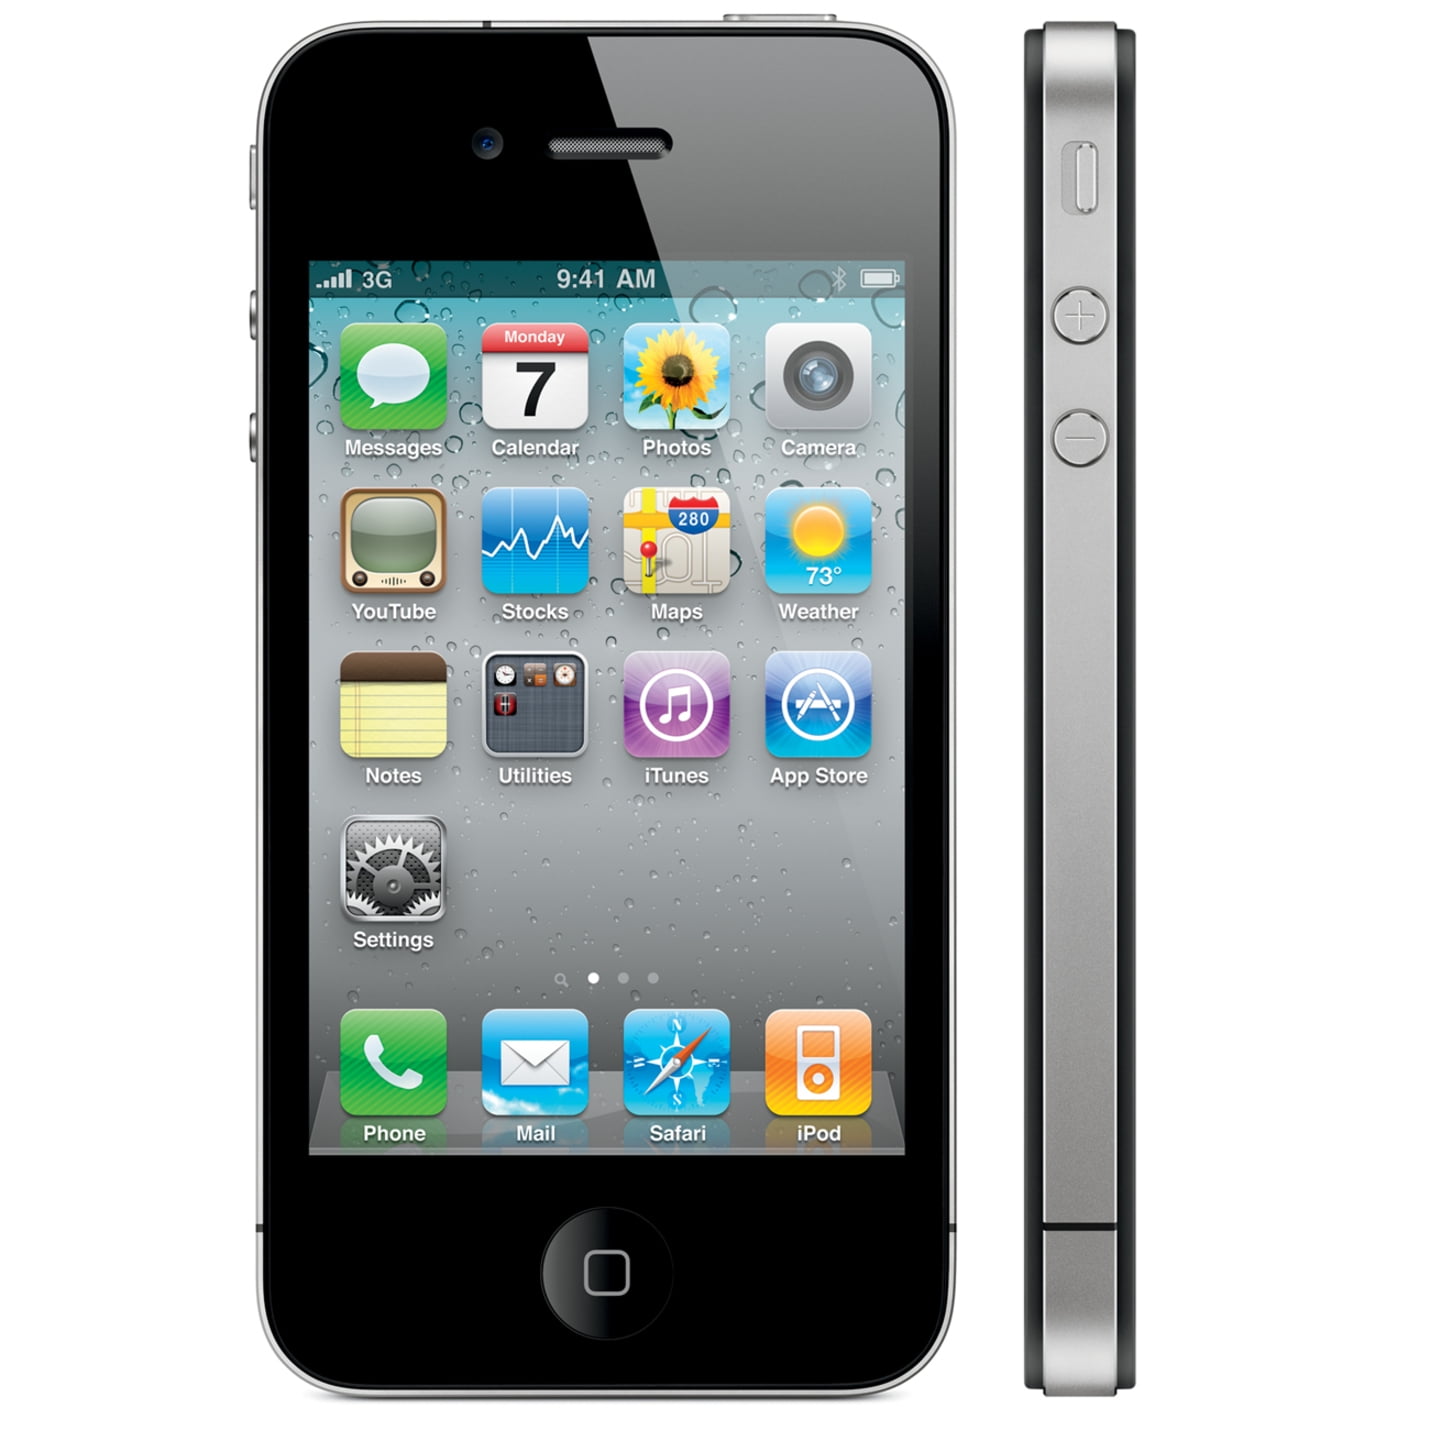 alarm snijder Flipper AT&T Apple iPhone 4 Smartphone, 16GB, Black - Walmart.com